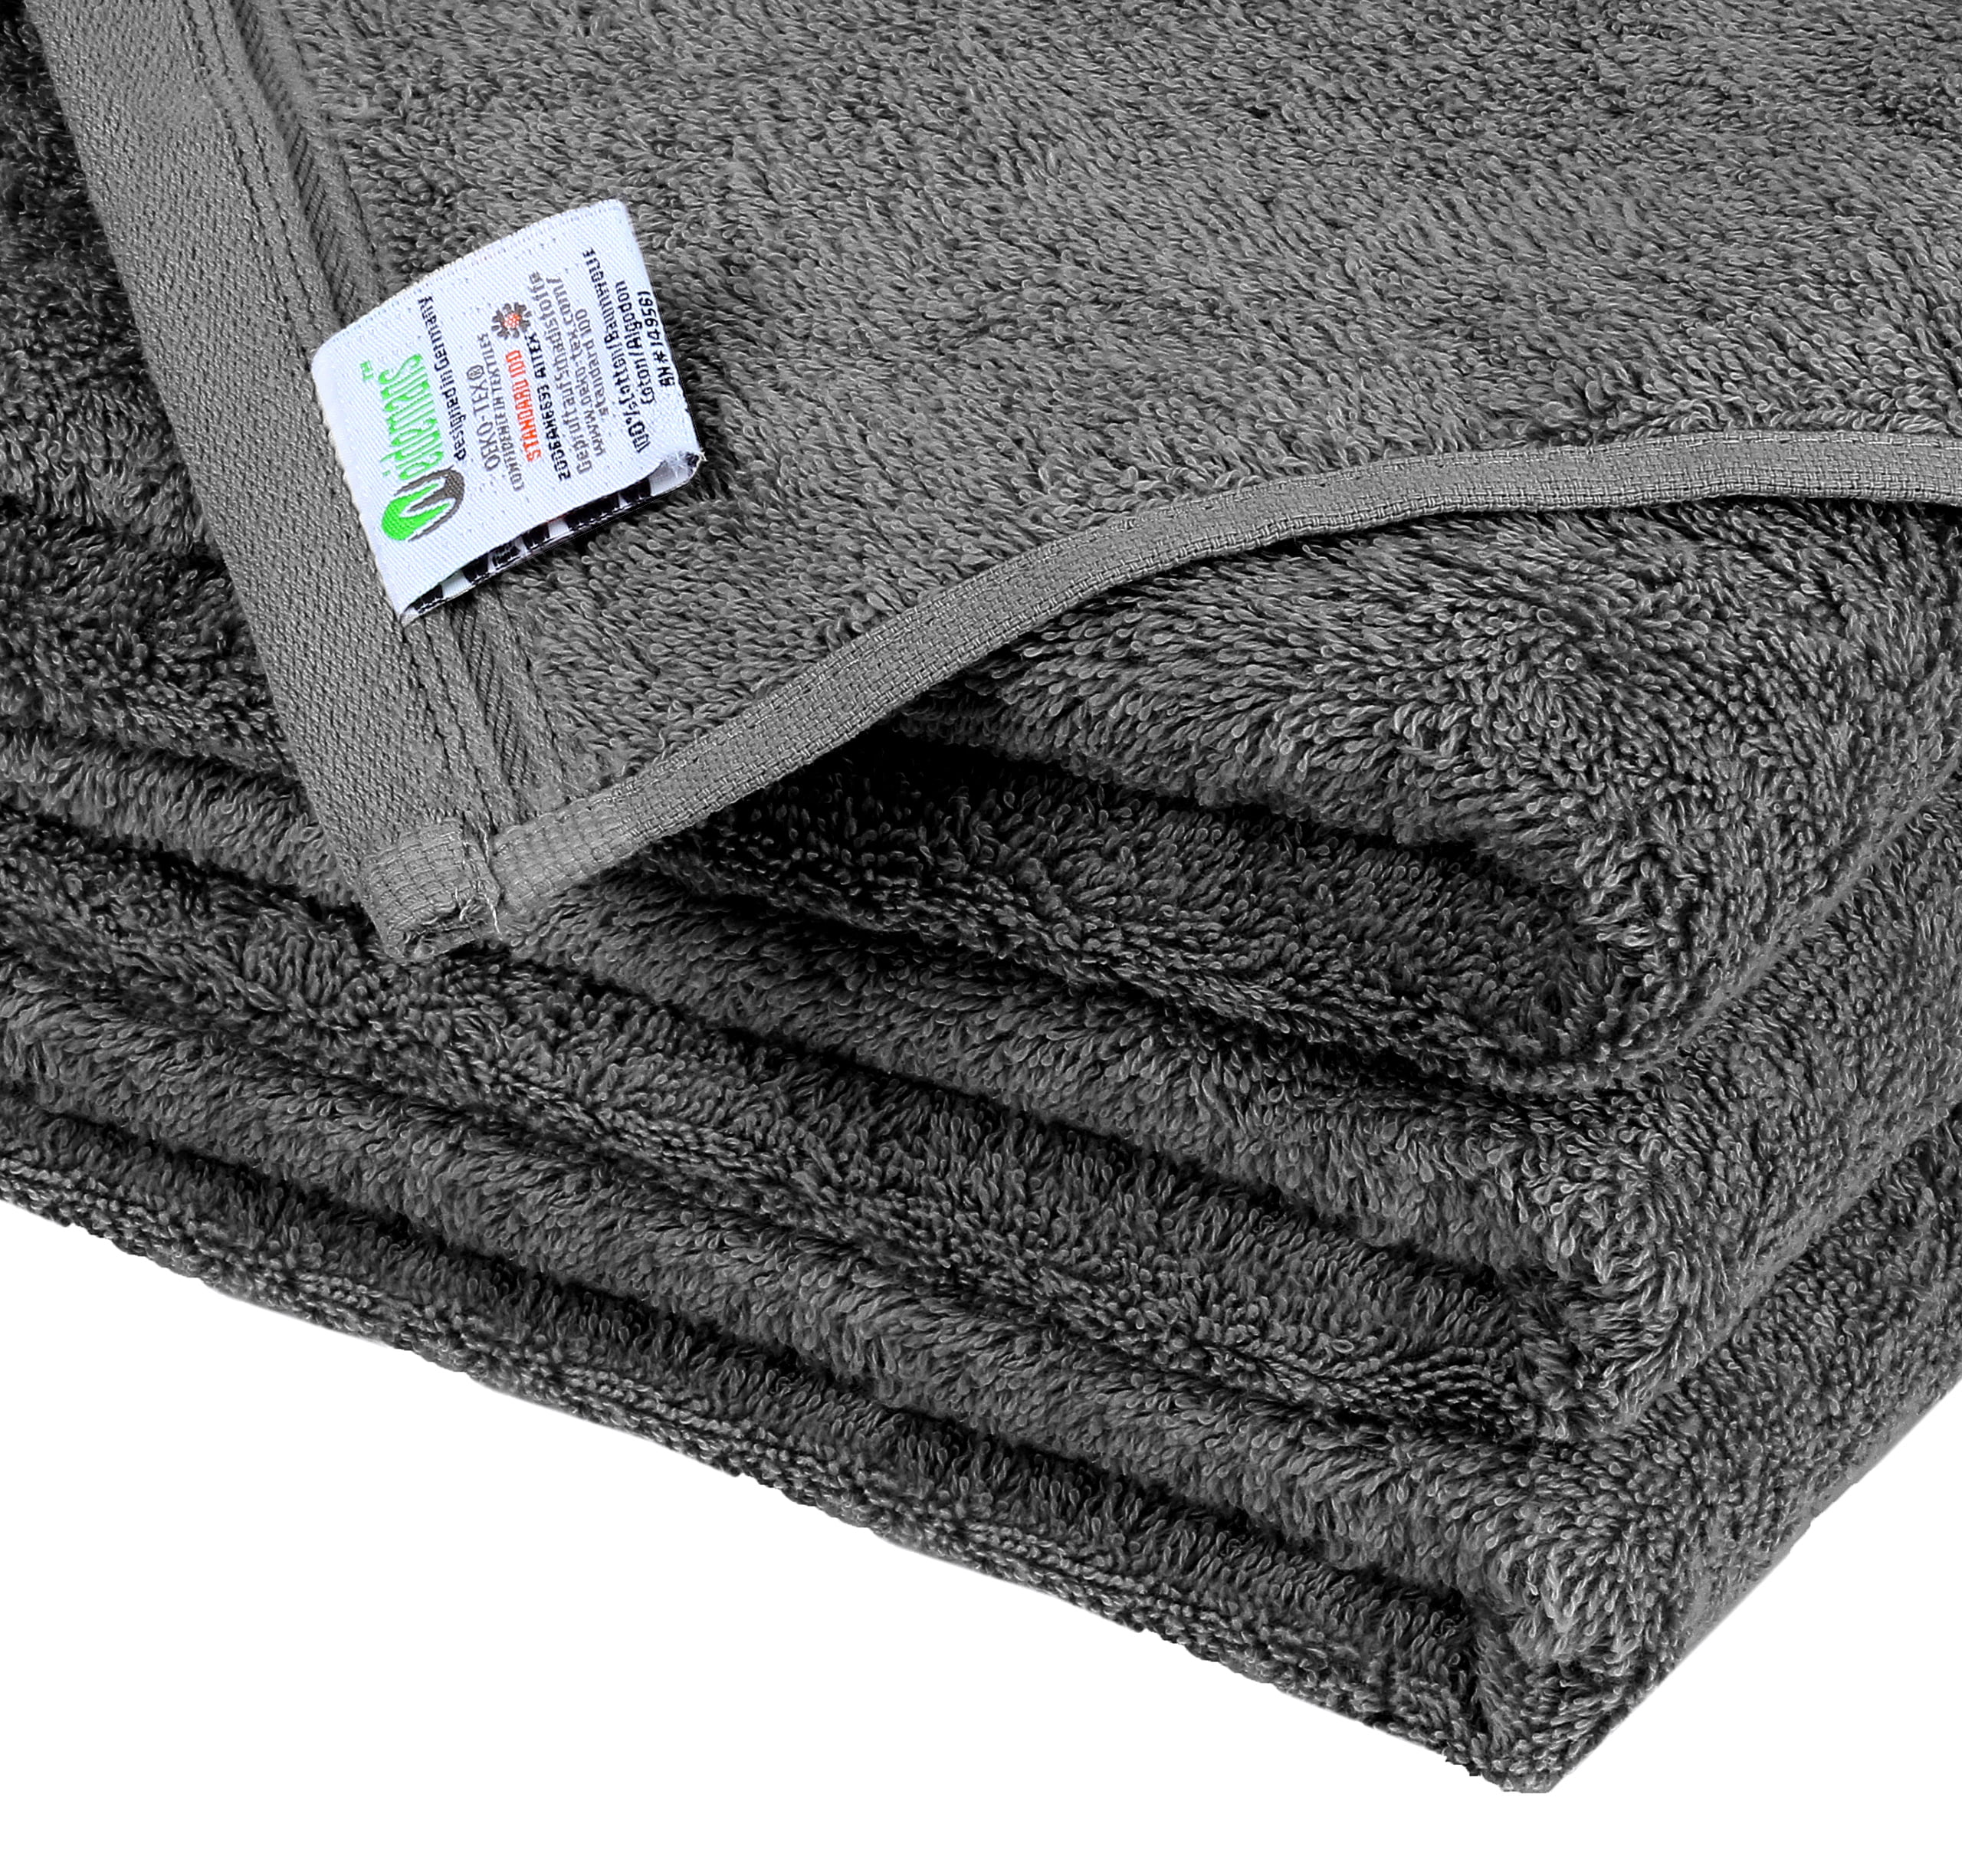 Dark Grey Route bath towel – 100% Cotton designed by Zuzunaga